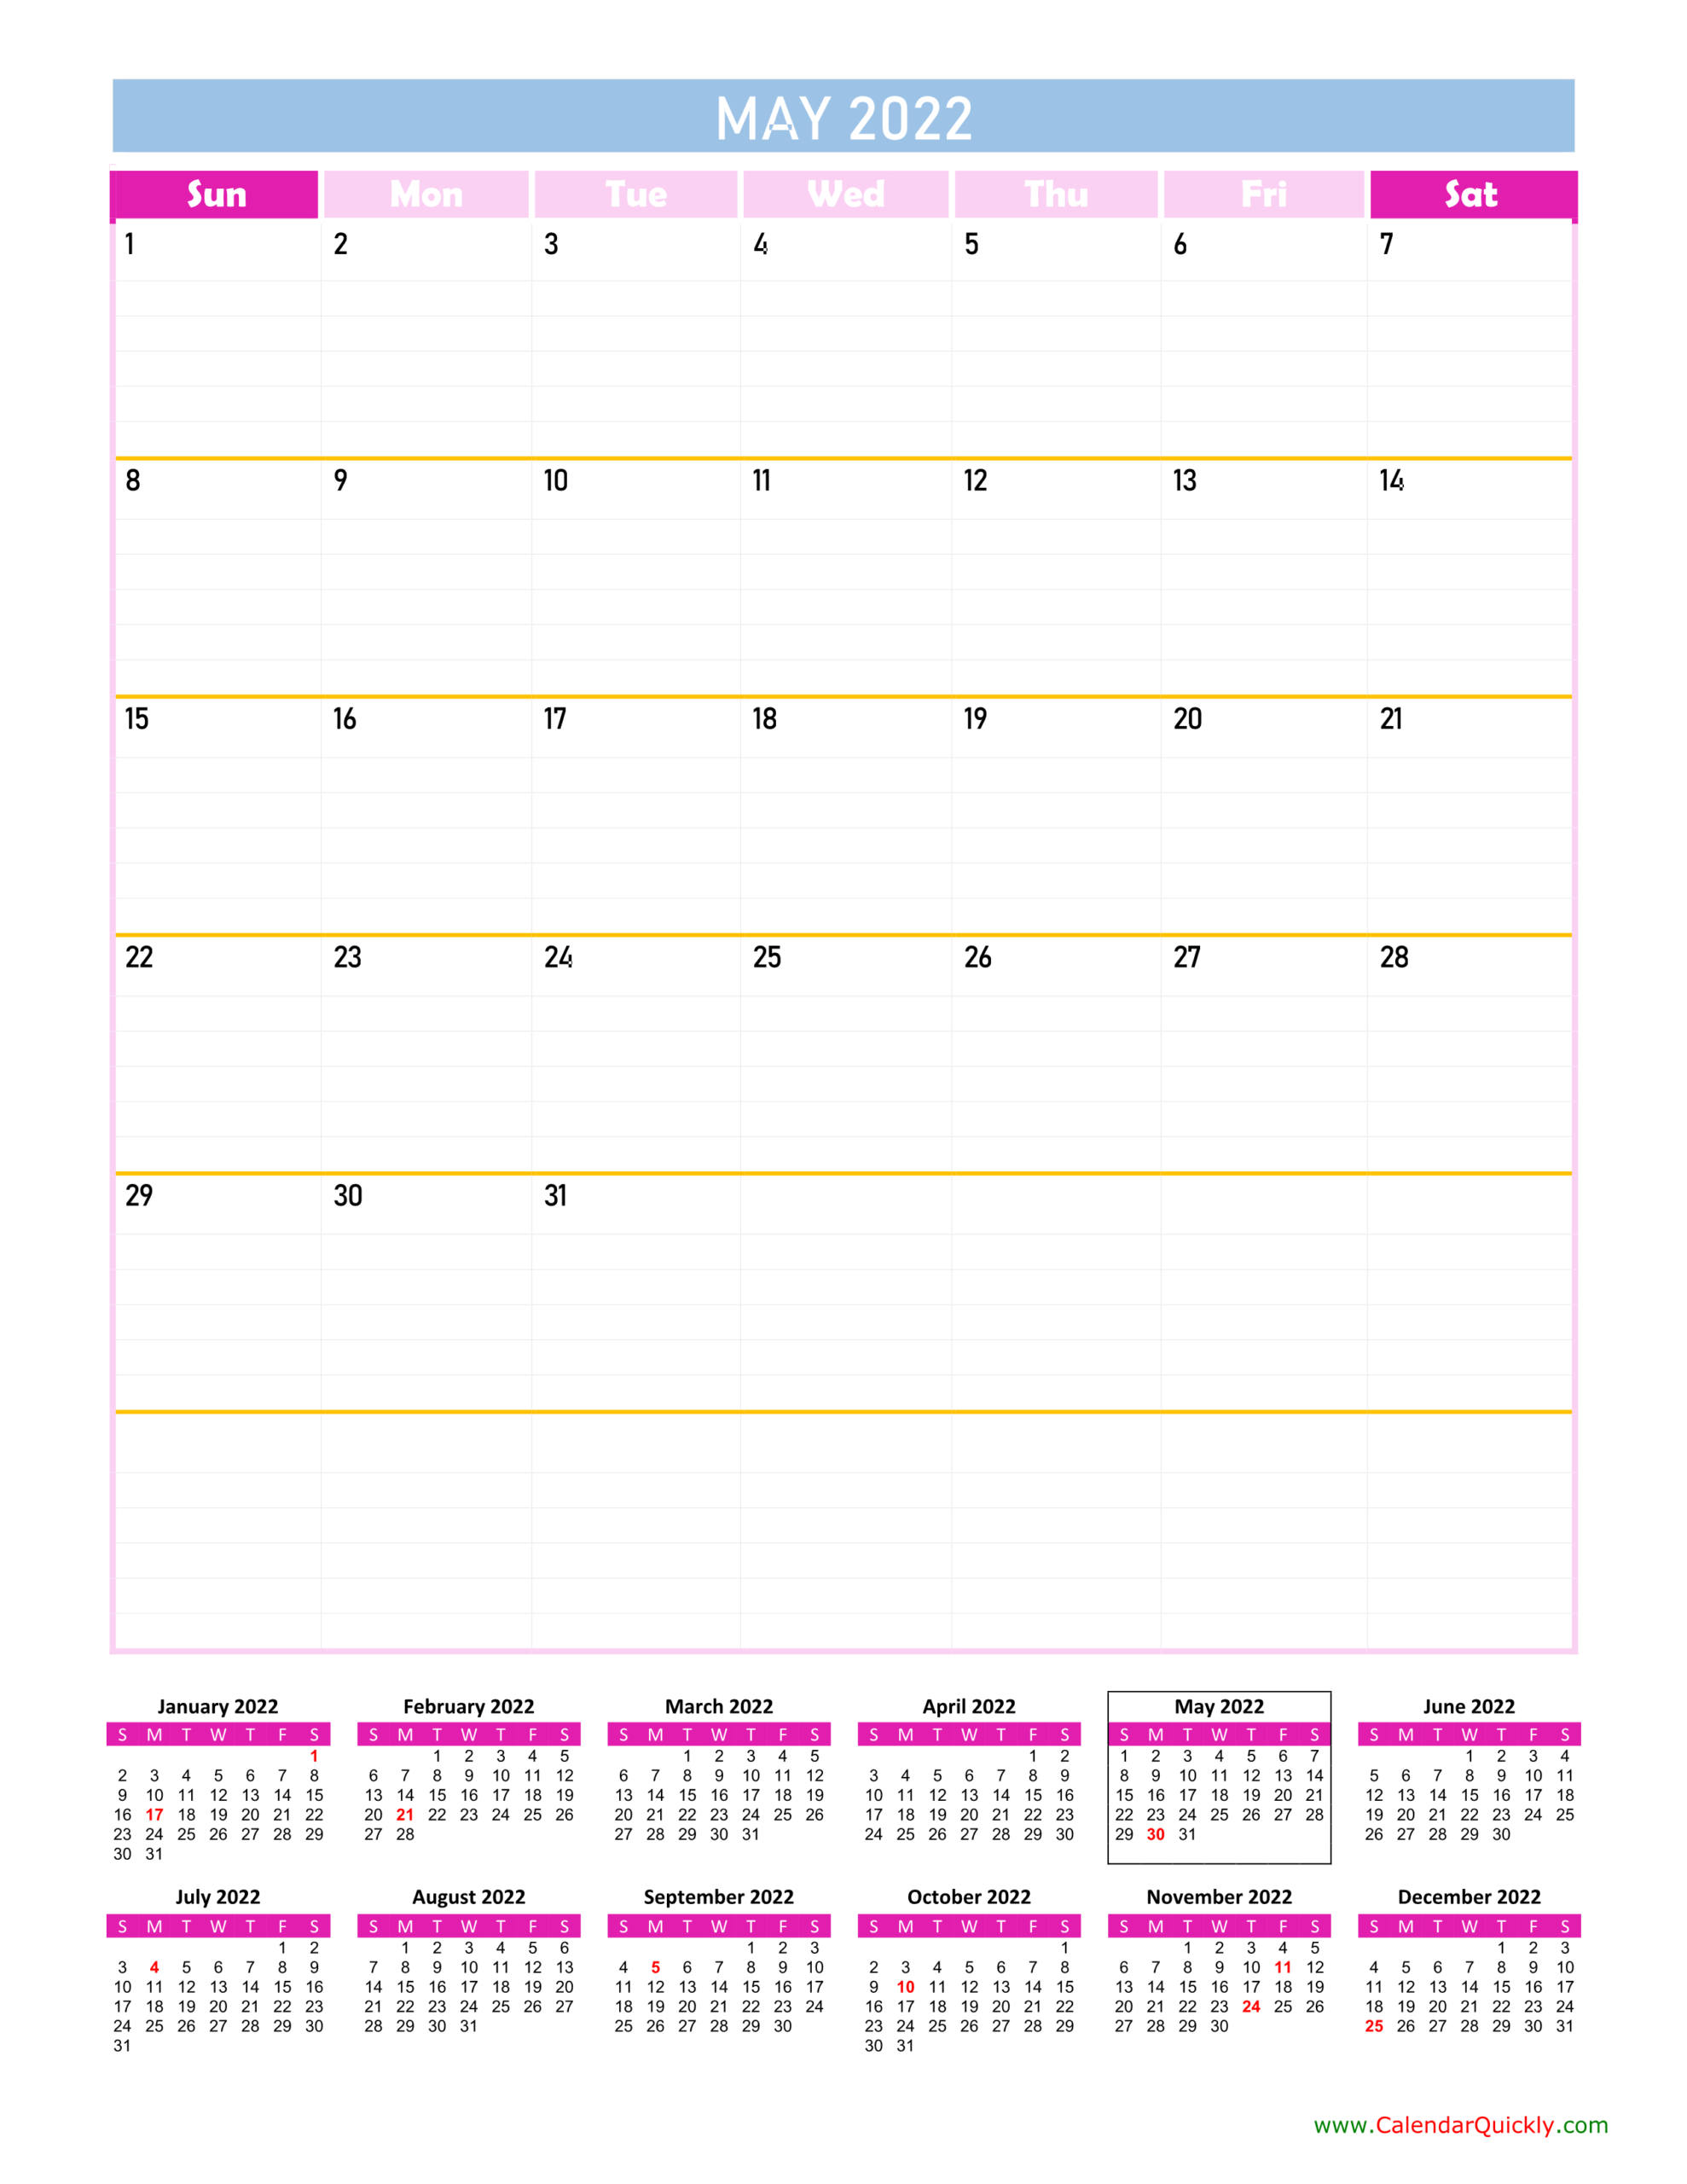 May Calendar 2022 Vertical | Calendar Quickly